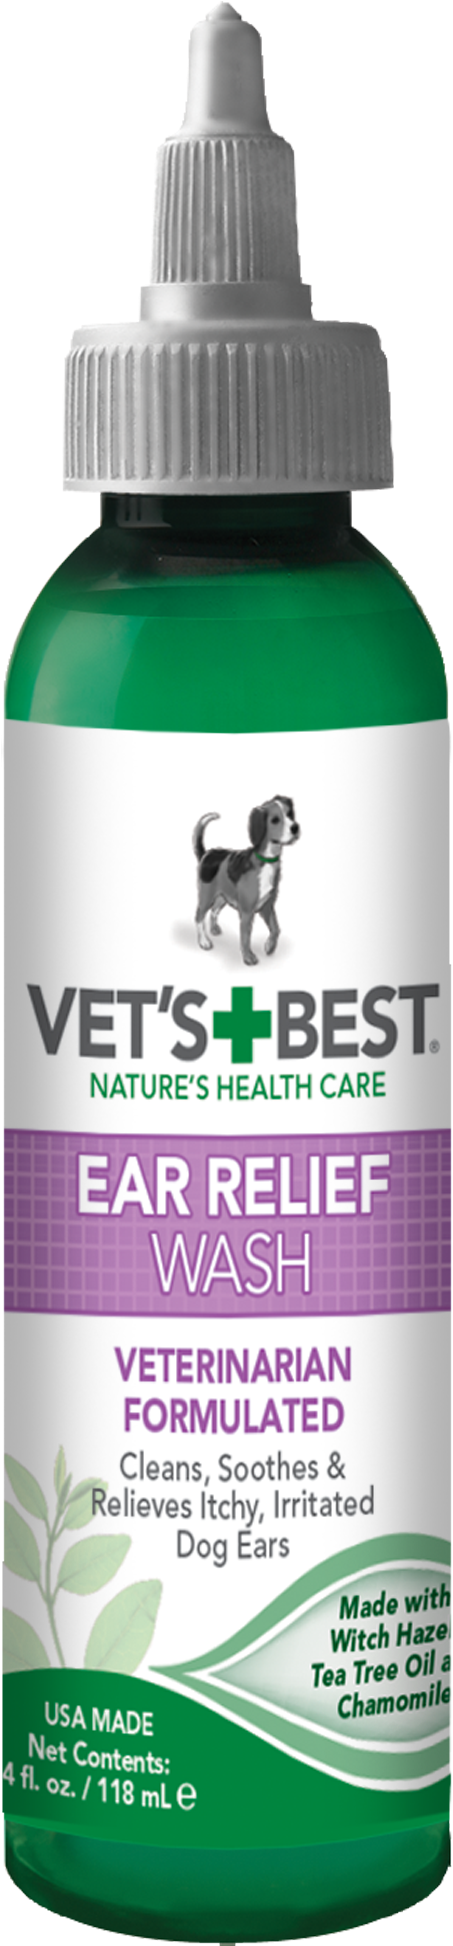 Vet's Best Dog Ear Relief Wash Cleaner - Vet's Best Clipart (2000x2000), Png Download